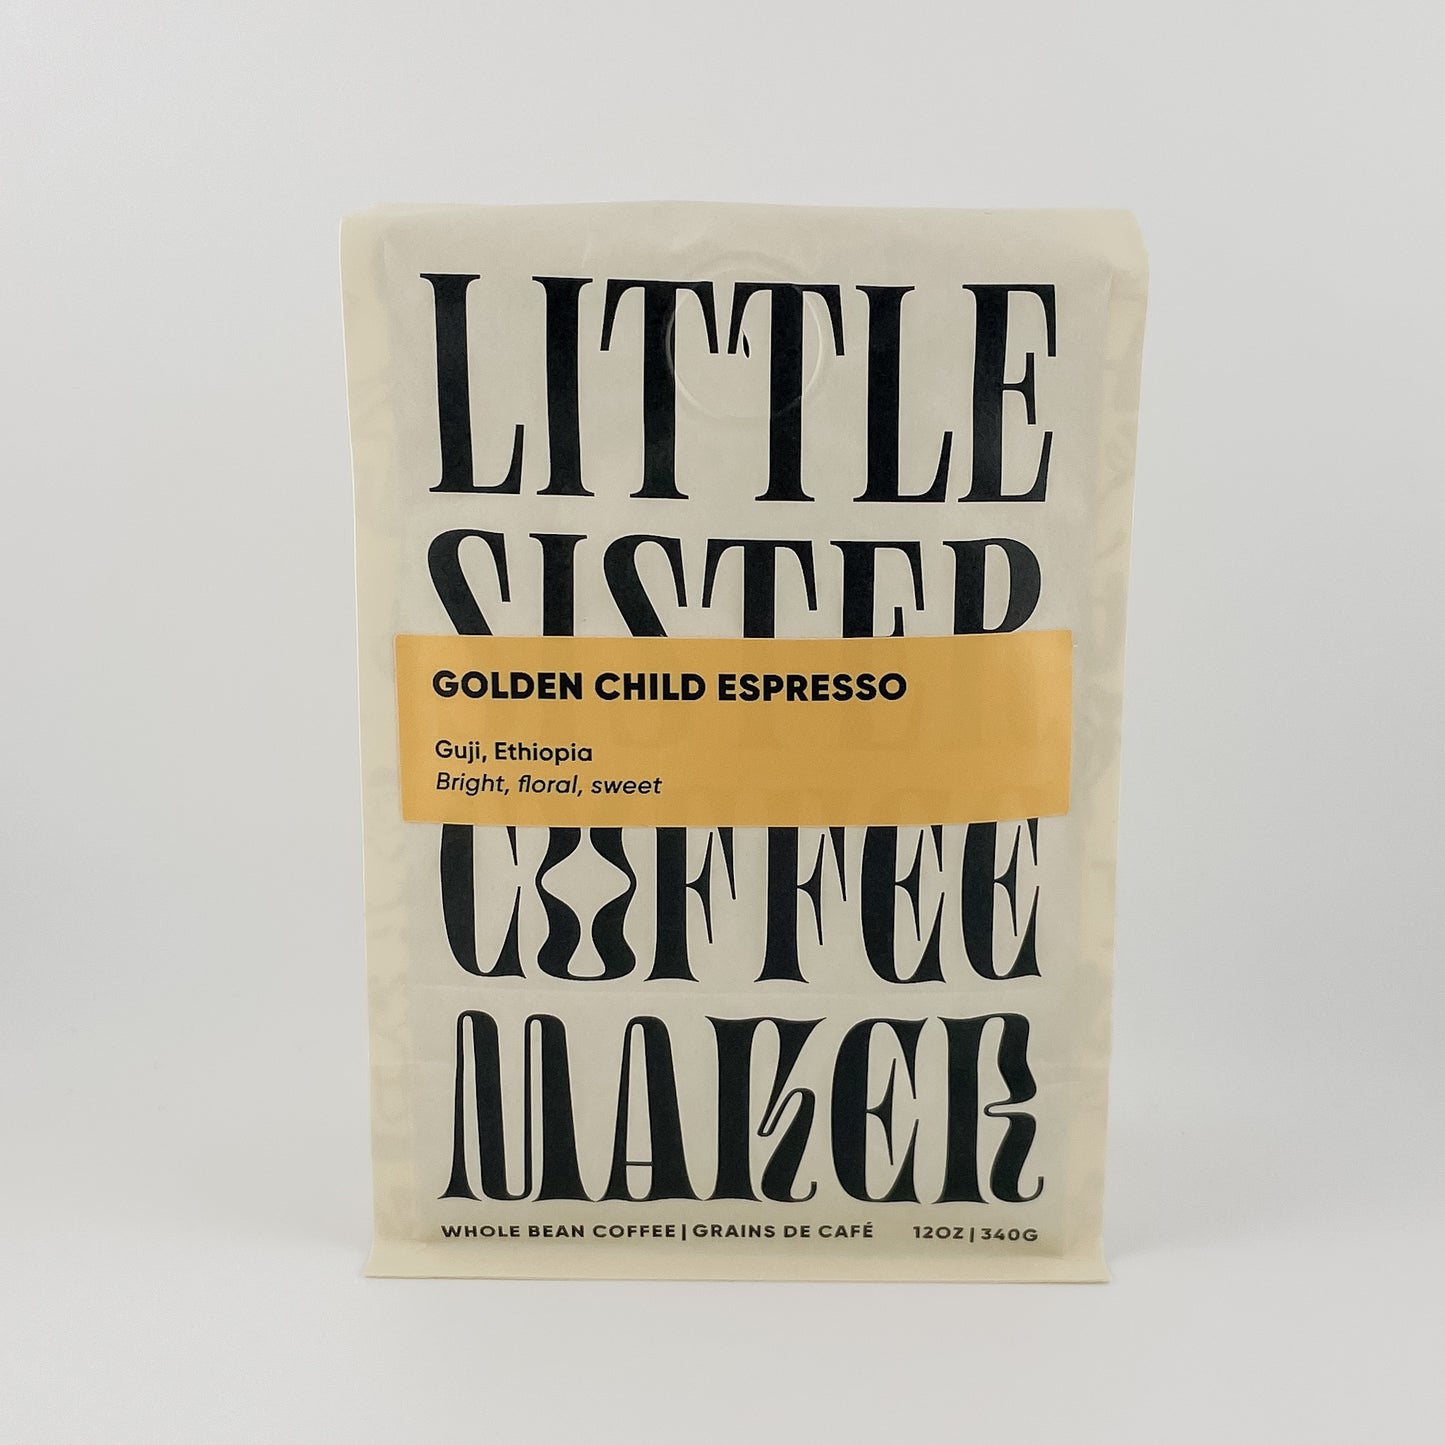 Littler Sister Coffee